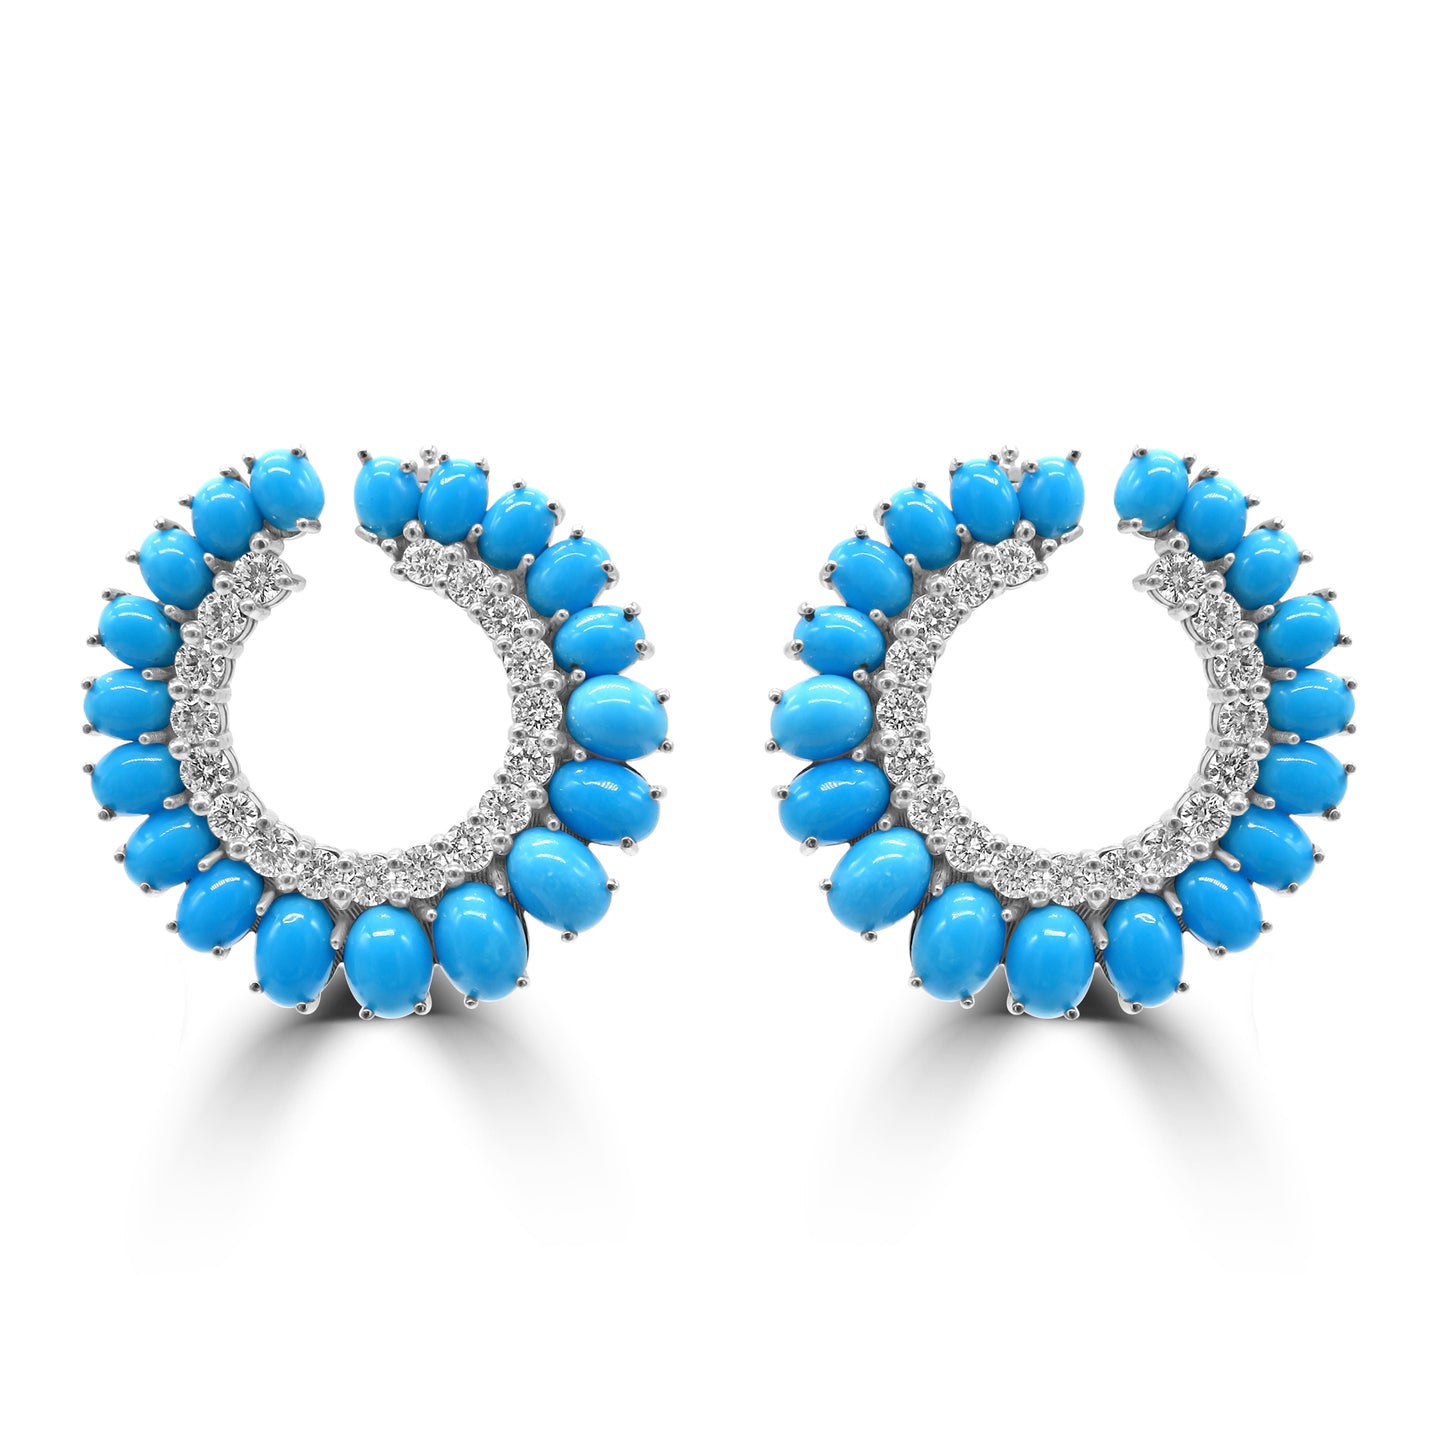 Turquoise and Diamond Earrings